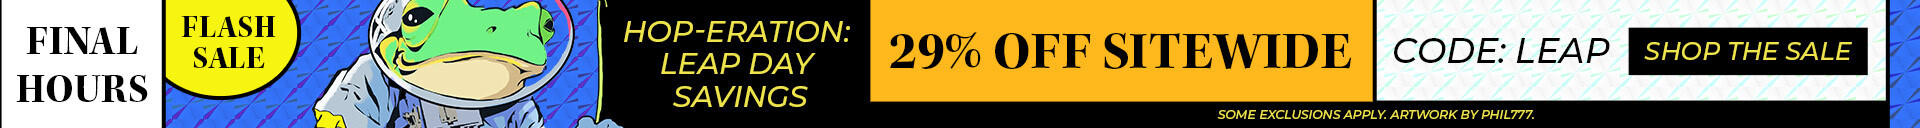 Hero Image: &quot;Final Hours. Hop-eration: Leap Day Savings. 29% Off Sitewide. Code LEAP. Shop the Sale. Flash Sale. &quot;